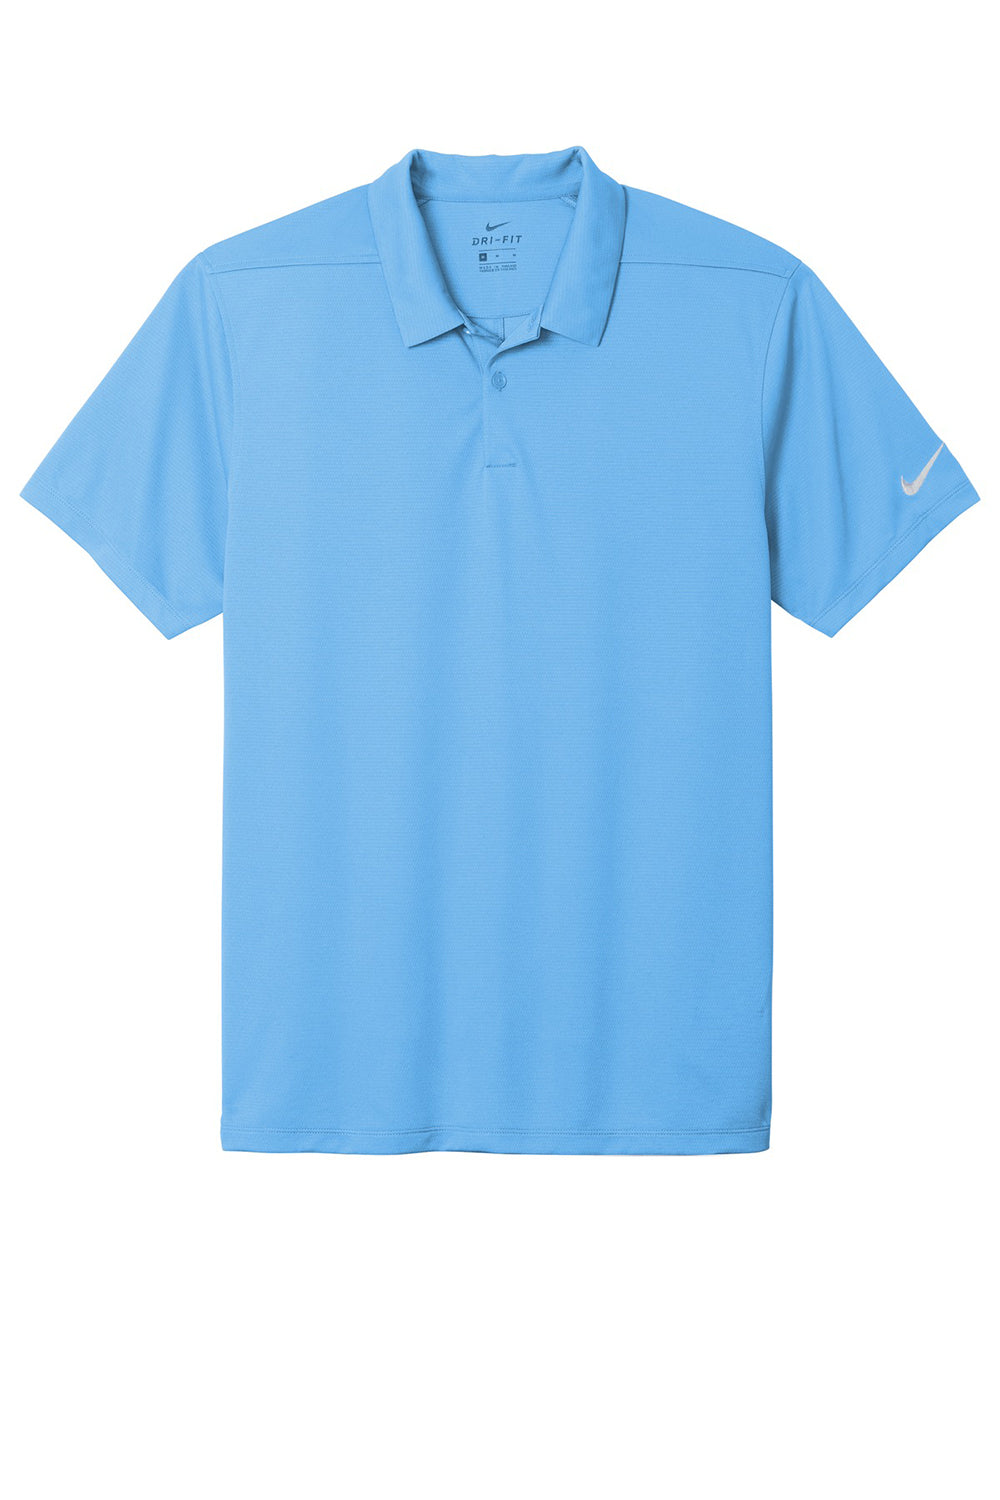 Nike NKBV6042 Mens Essential Dri-Fit Moisture Wicking Short Sleeve Polo Shirt University Blue Flat Front